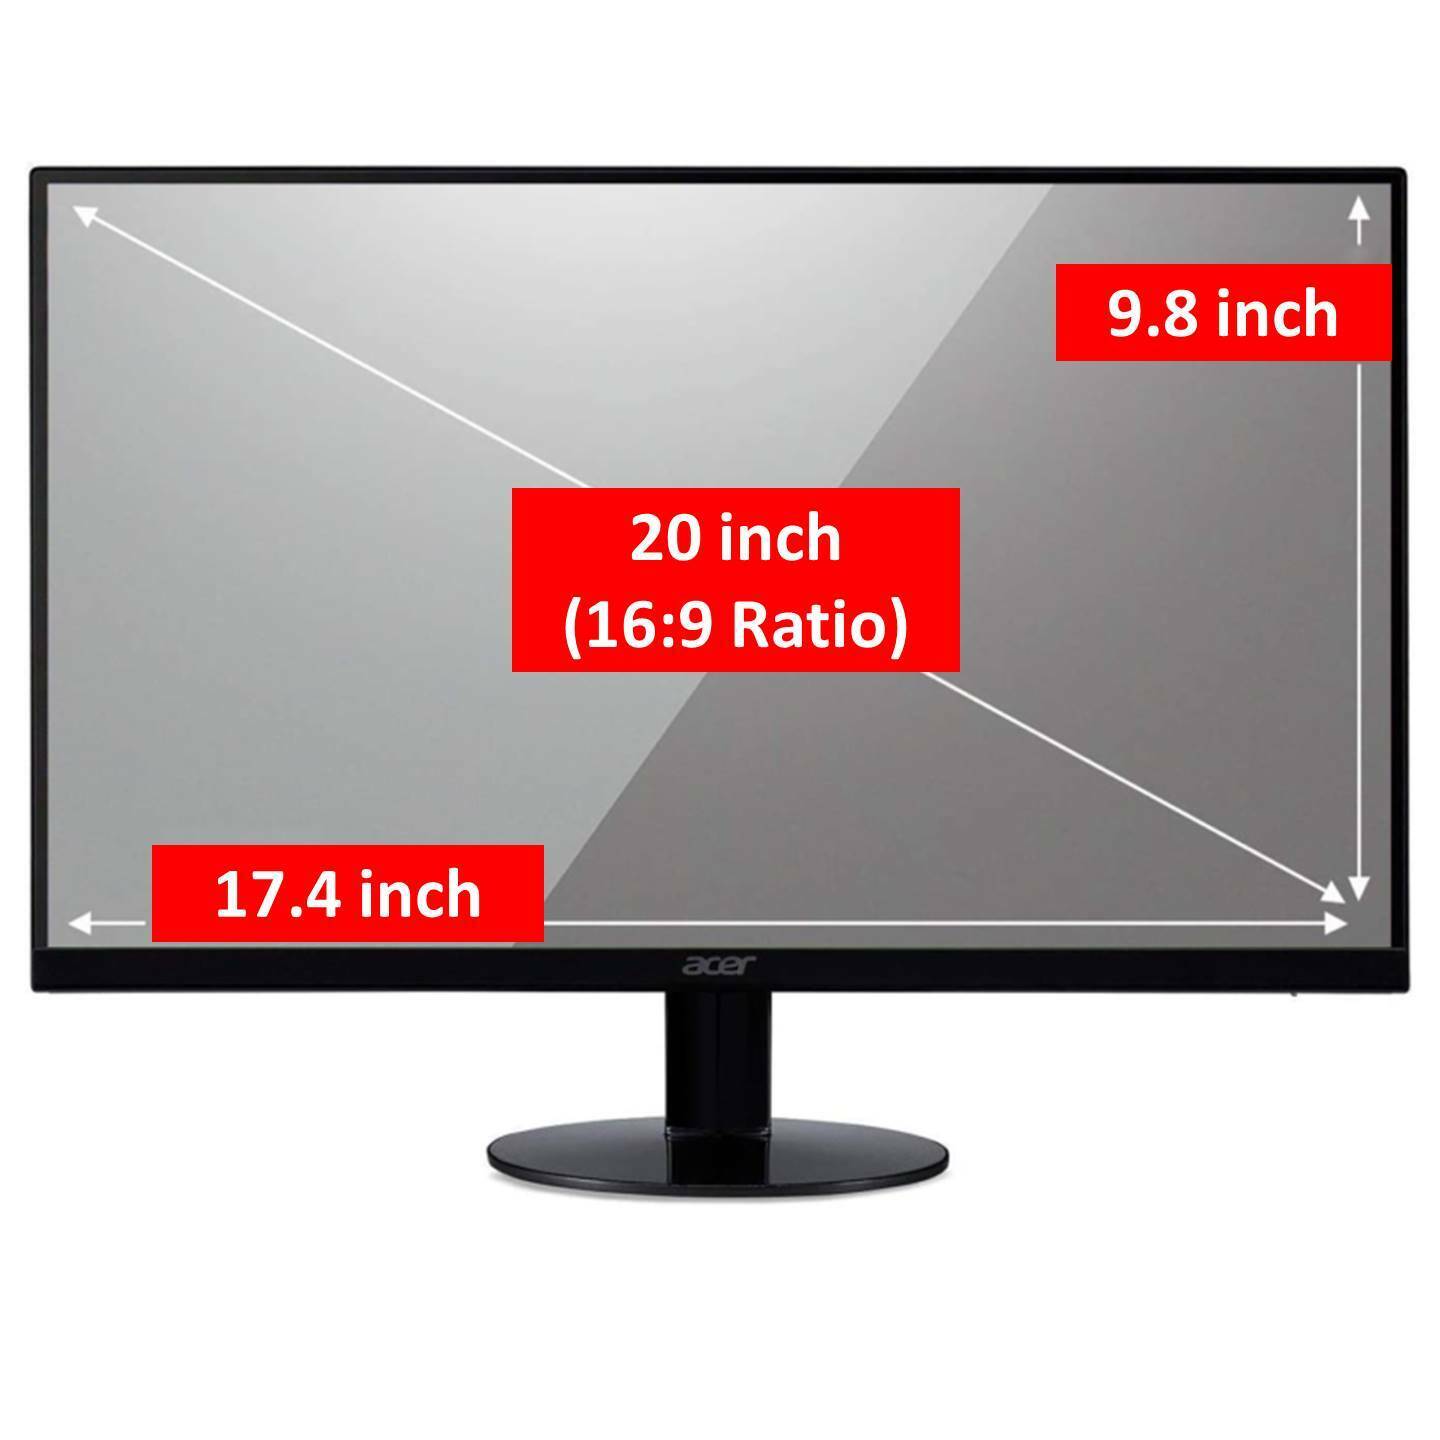 HD Clear Screen Protector Guard Shield For Desktop PC Computer Monitor (16:9)